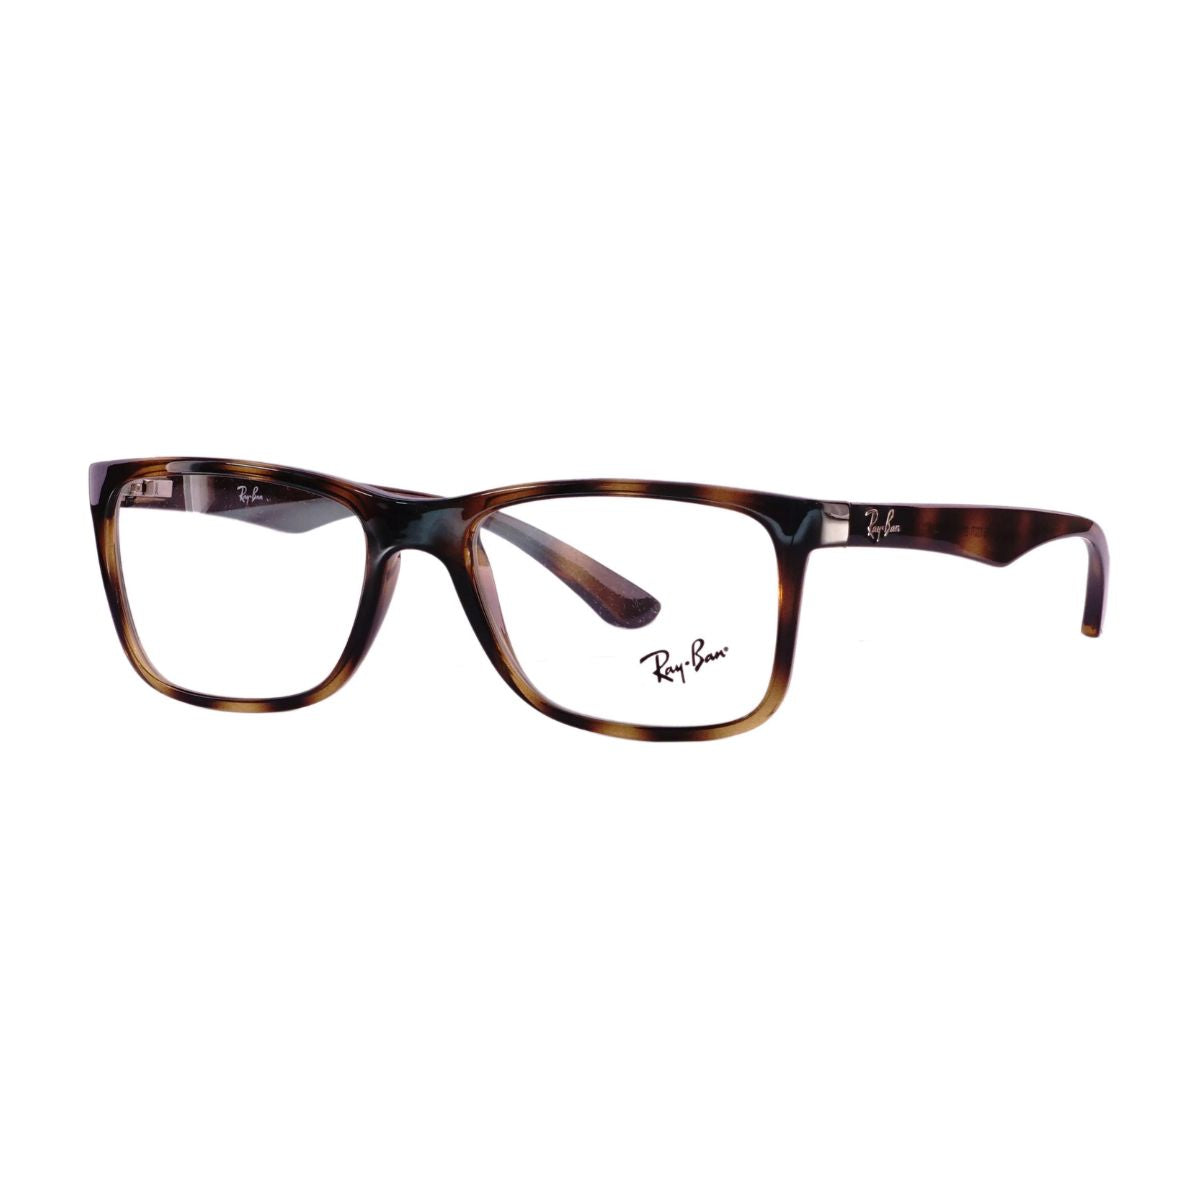 "Rayban 7027I 2012 optical eyewear glasses frame for men's and women's at optorium"